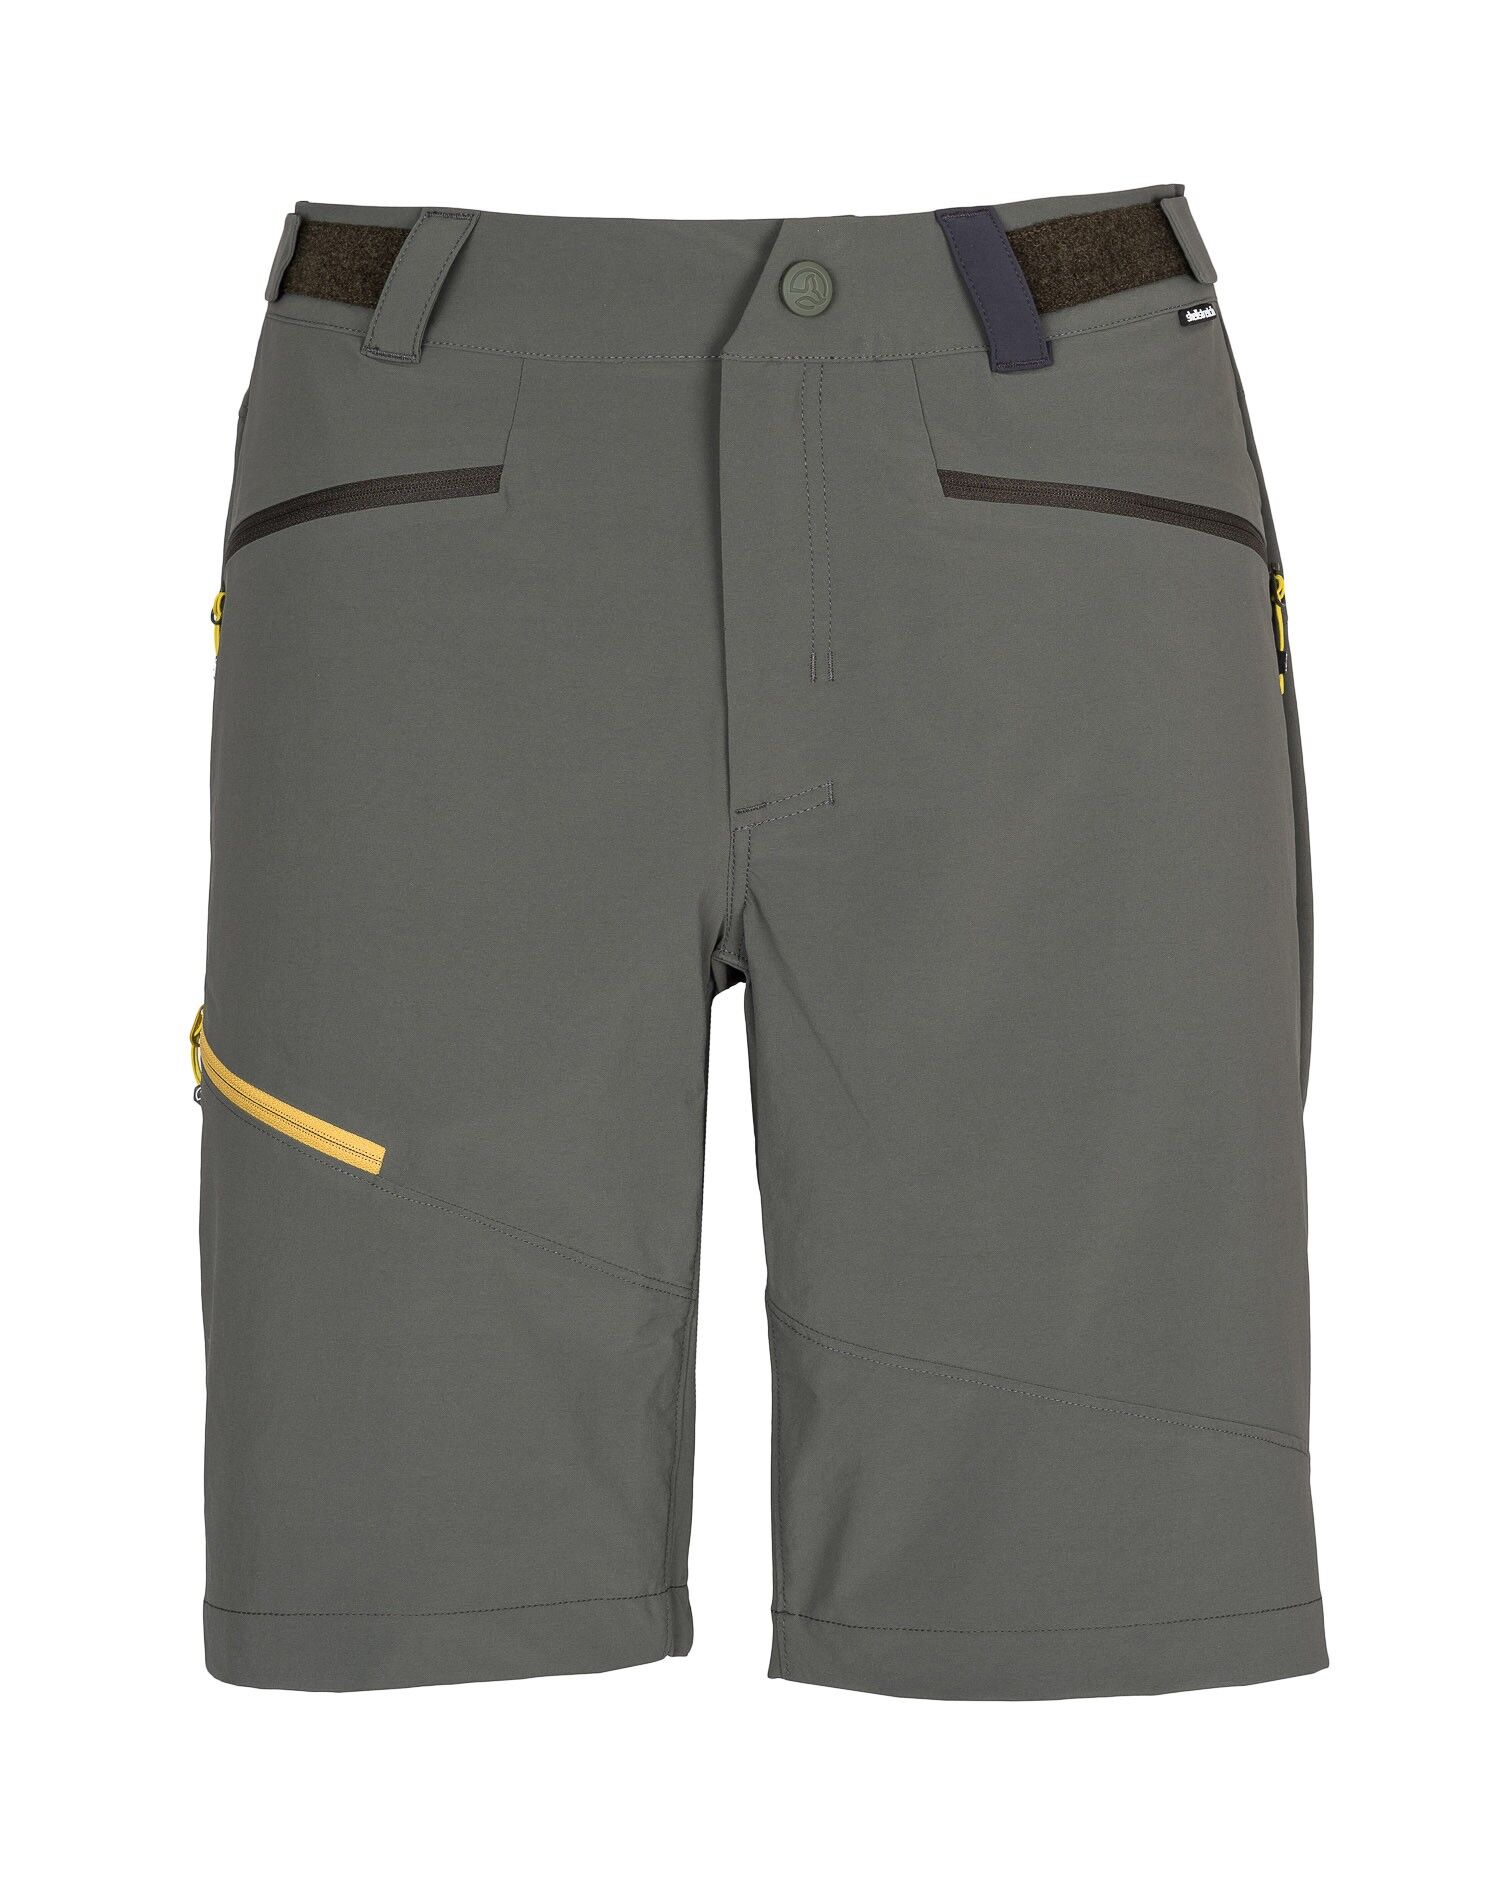 Ternua Rotor Bermuda - Hiking shorts - Men's